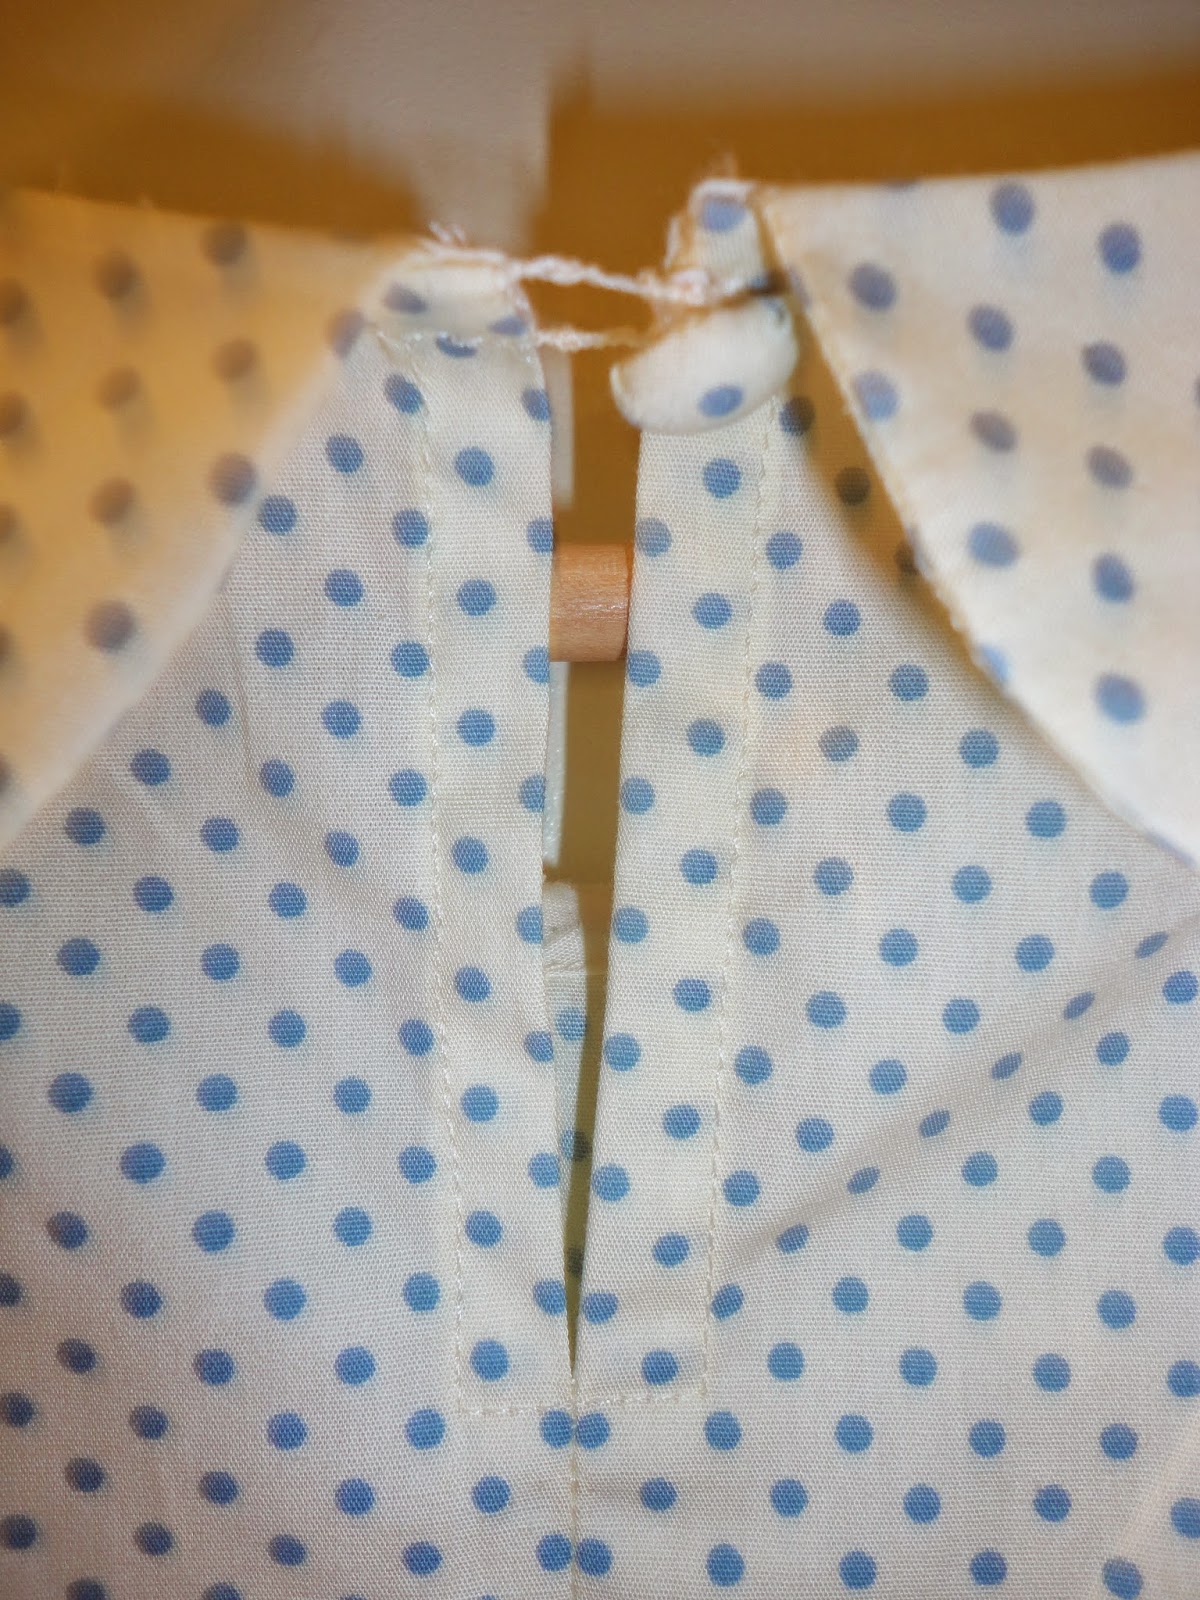 The Stylish Stitcher: My lovely finished polka dot top